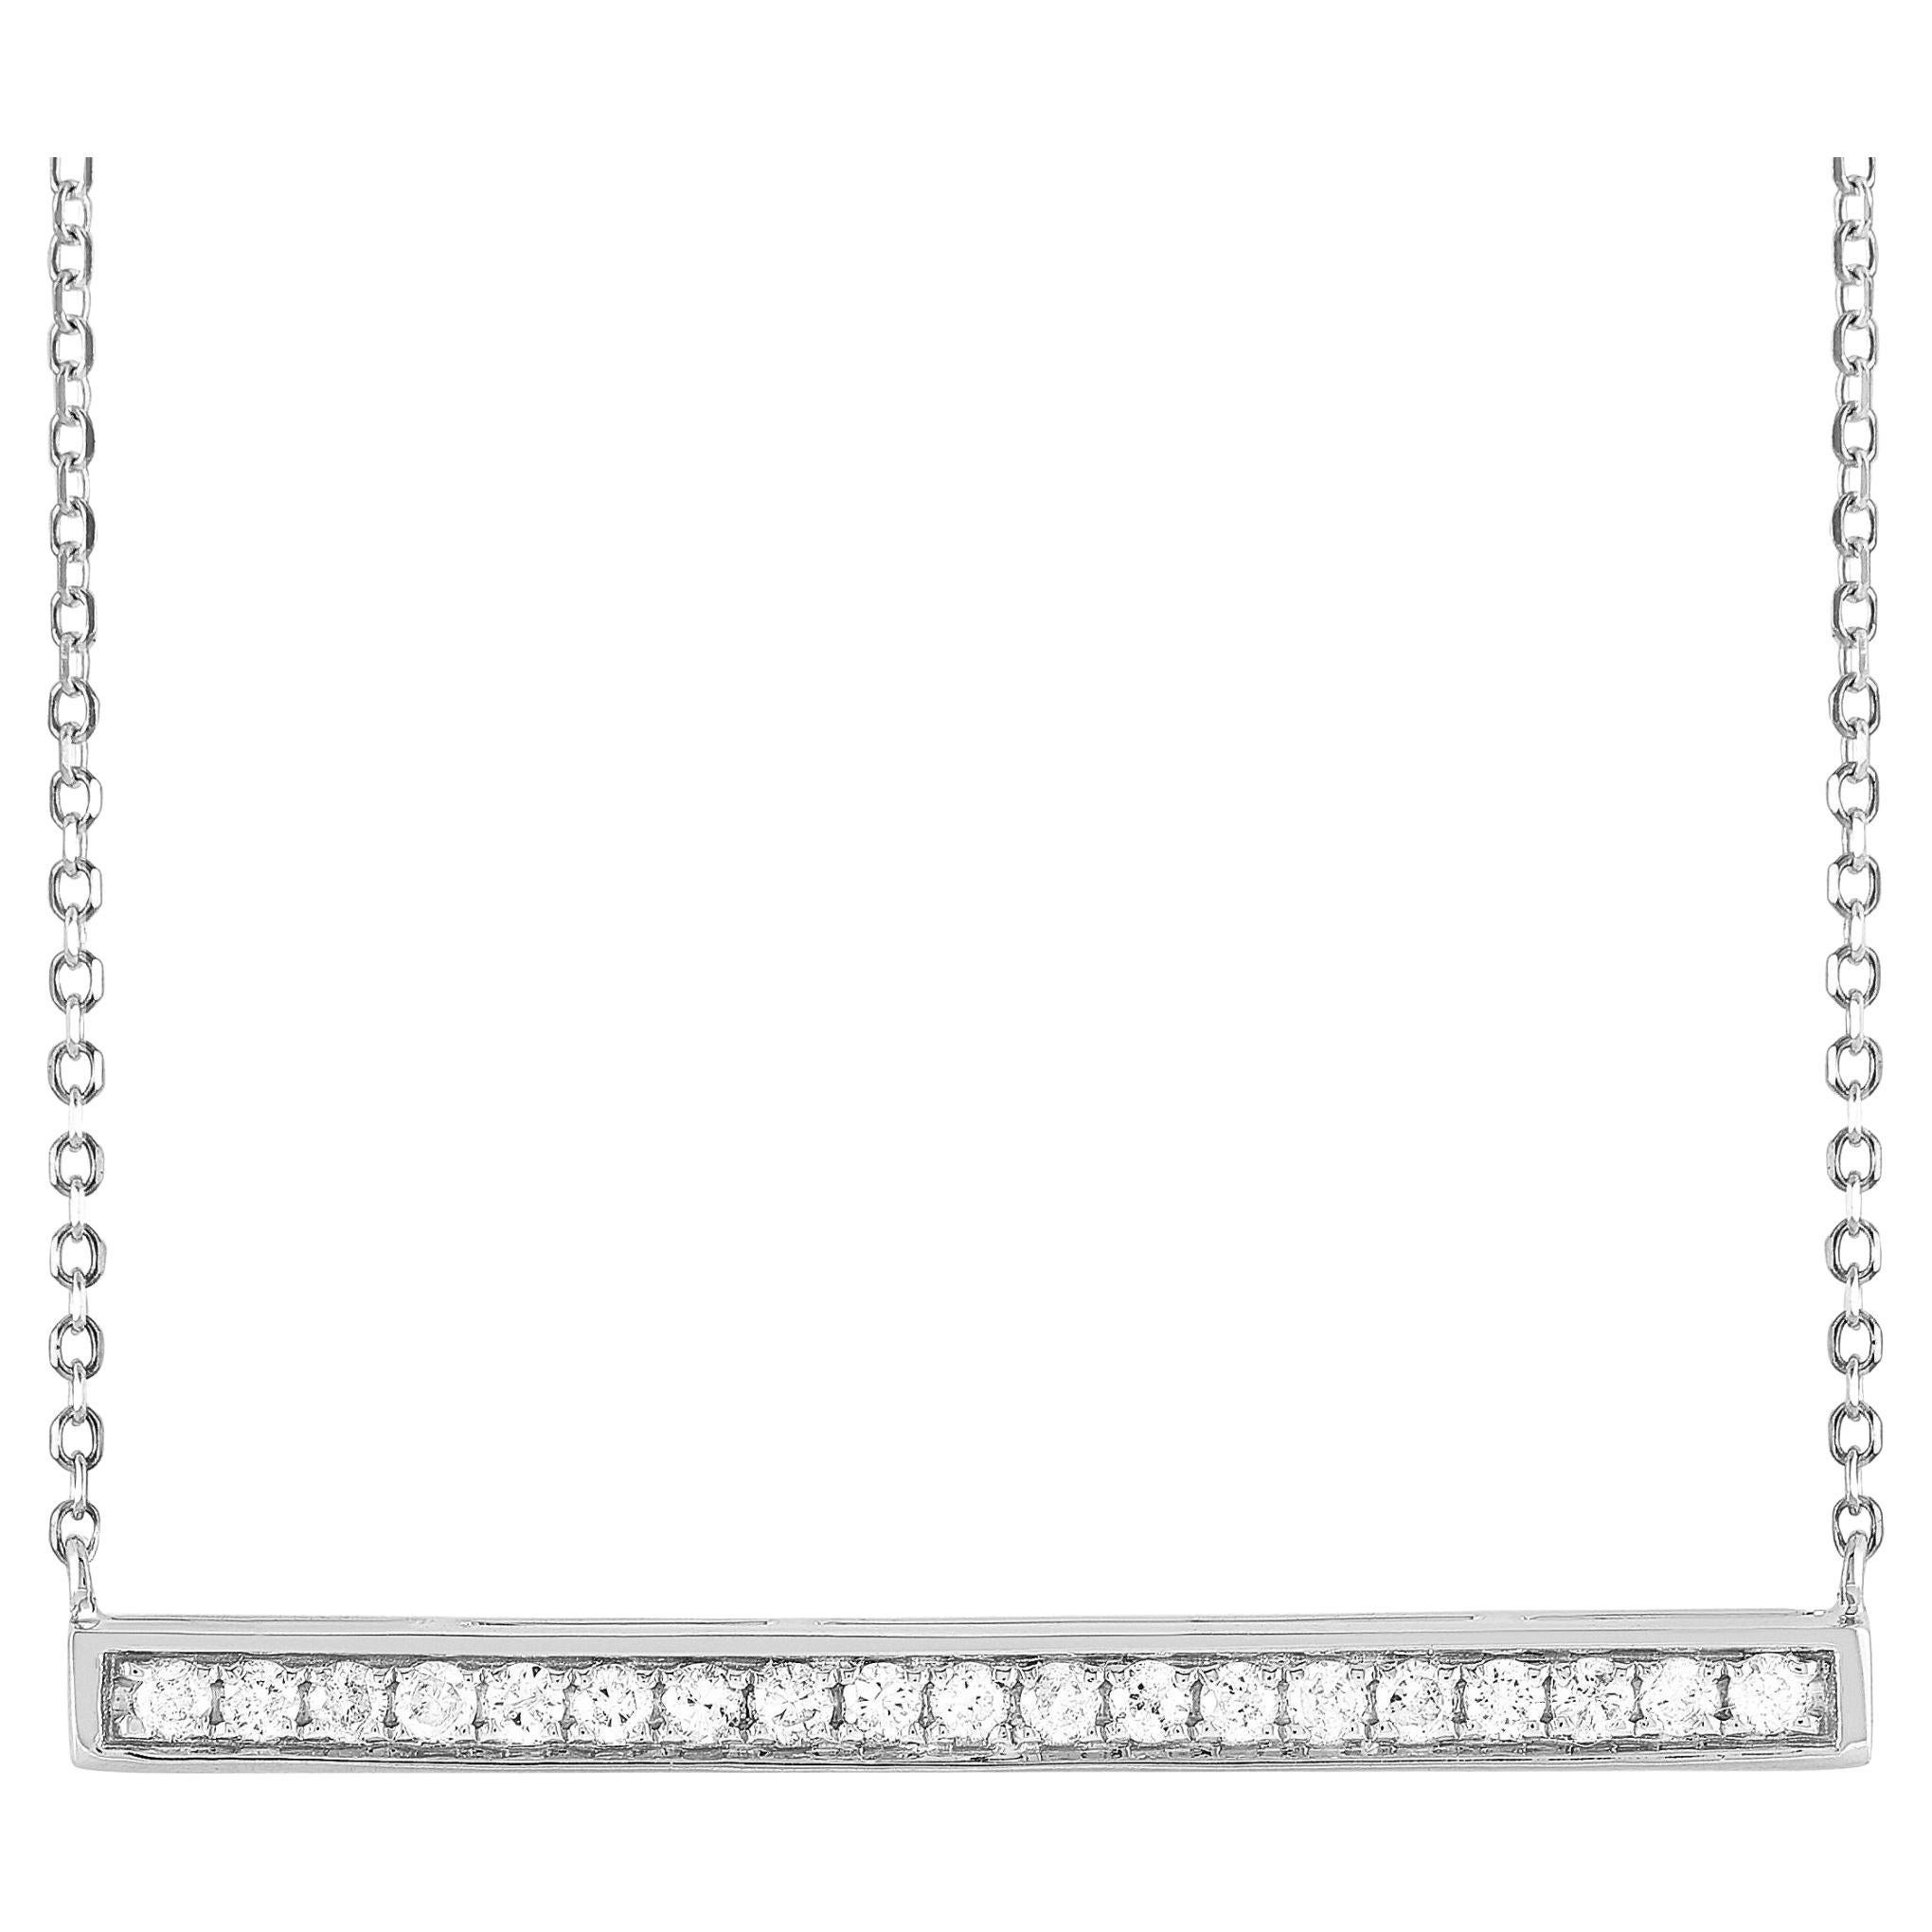 Lb Exclusive 14k White Gold 0.25 Carat Diamond Bar Necklace For Sale